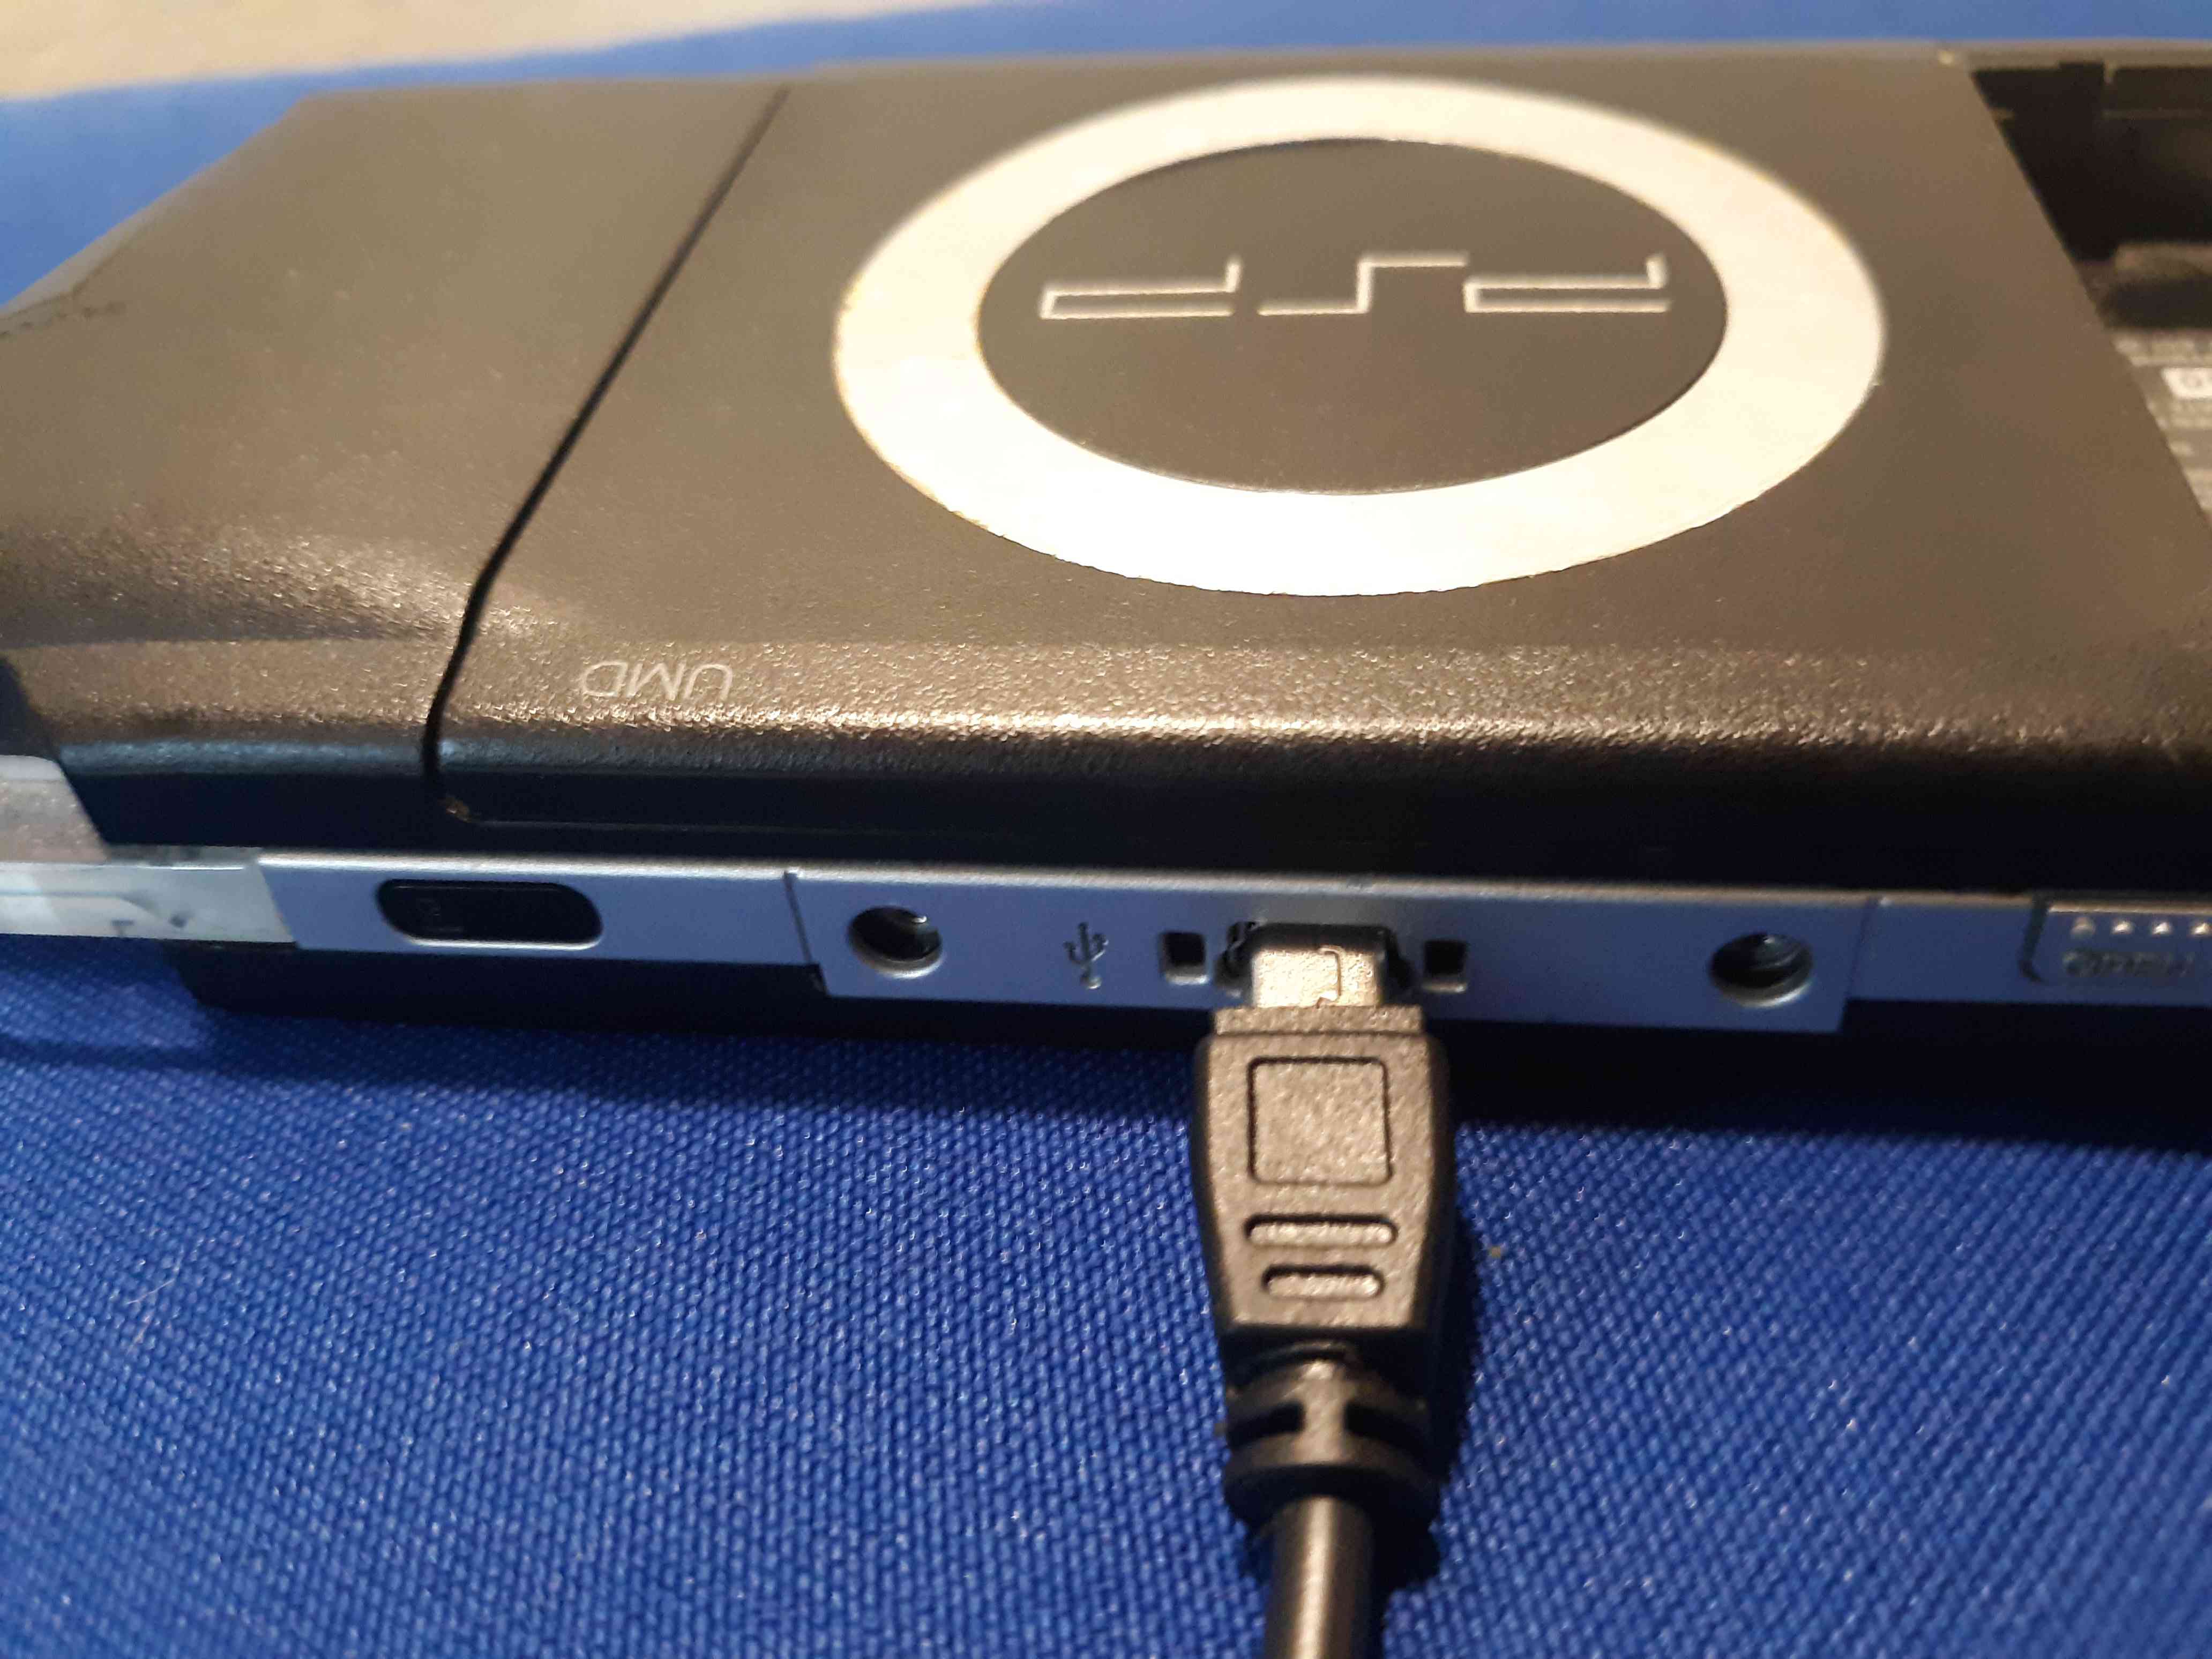 USB mini-B konektor zapojený do PSP